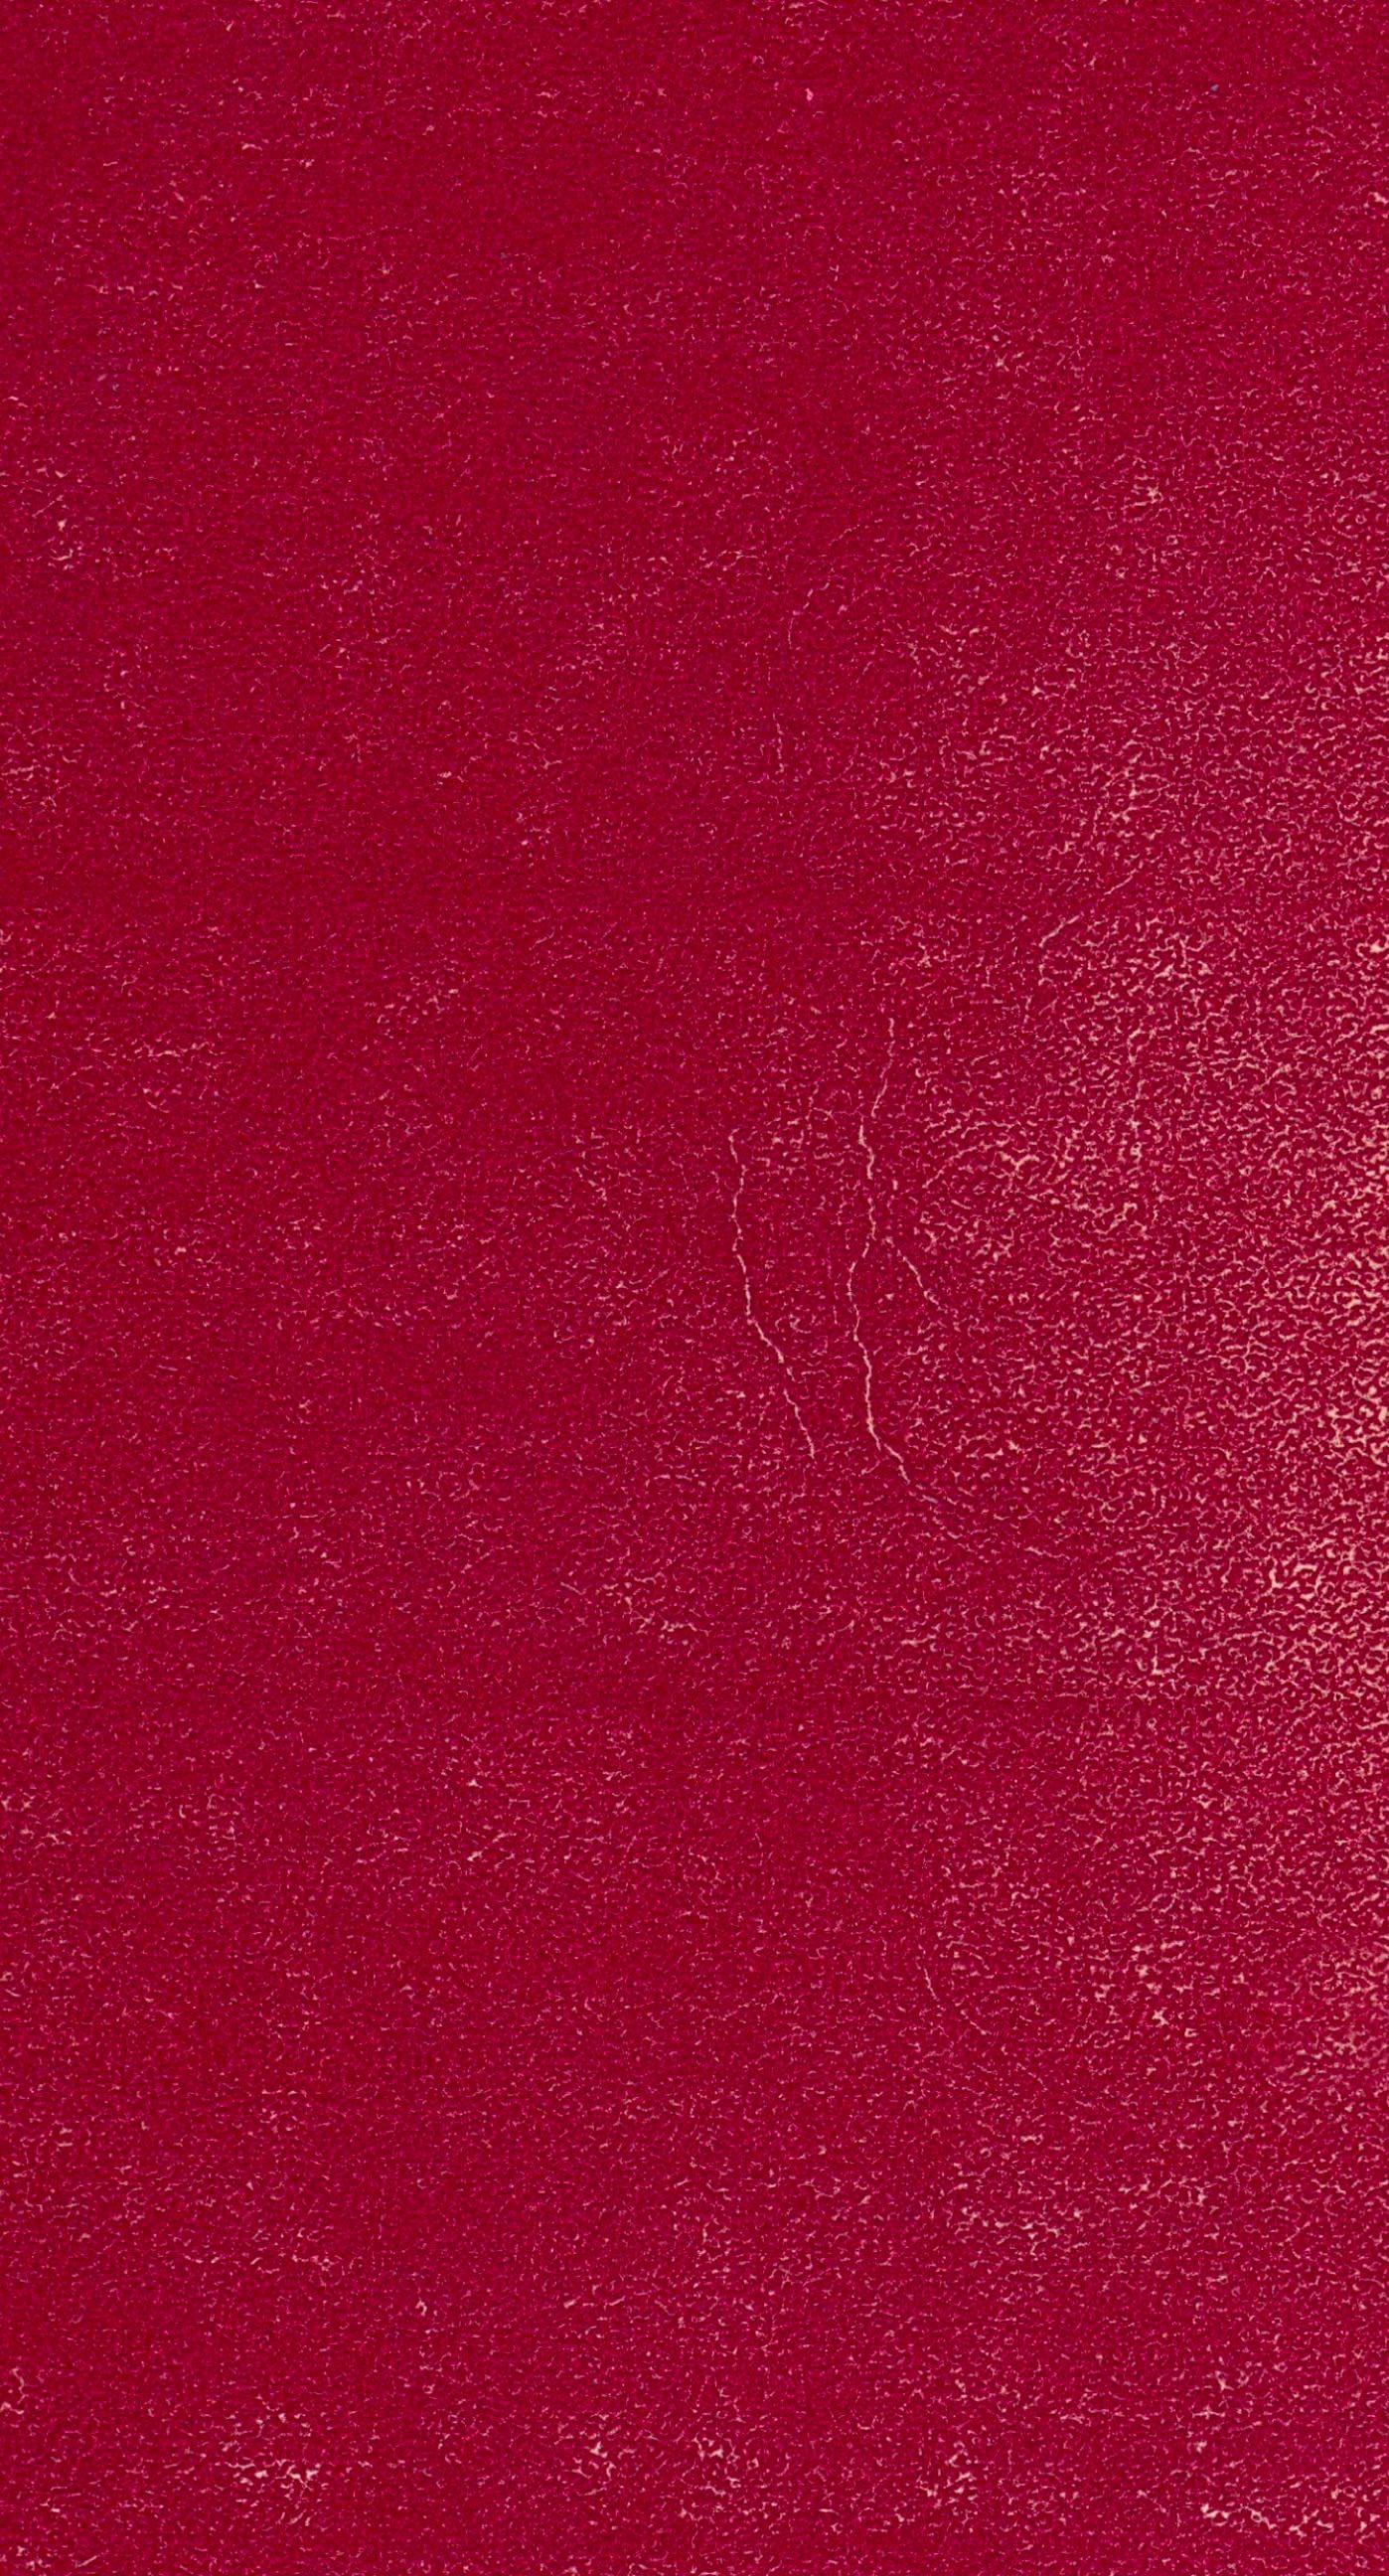 1398x2592 Paper red purple iPhone7 Plus Wallpaper